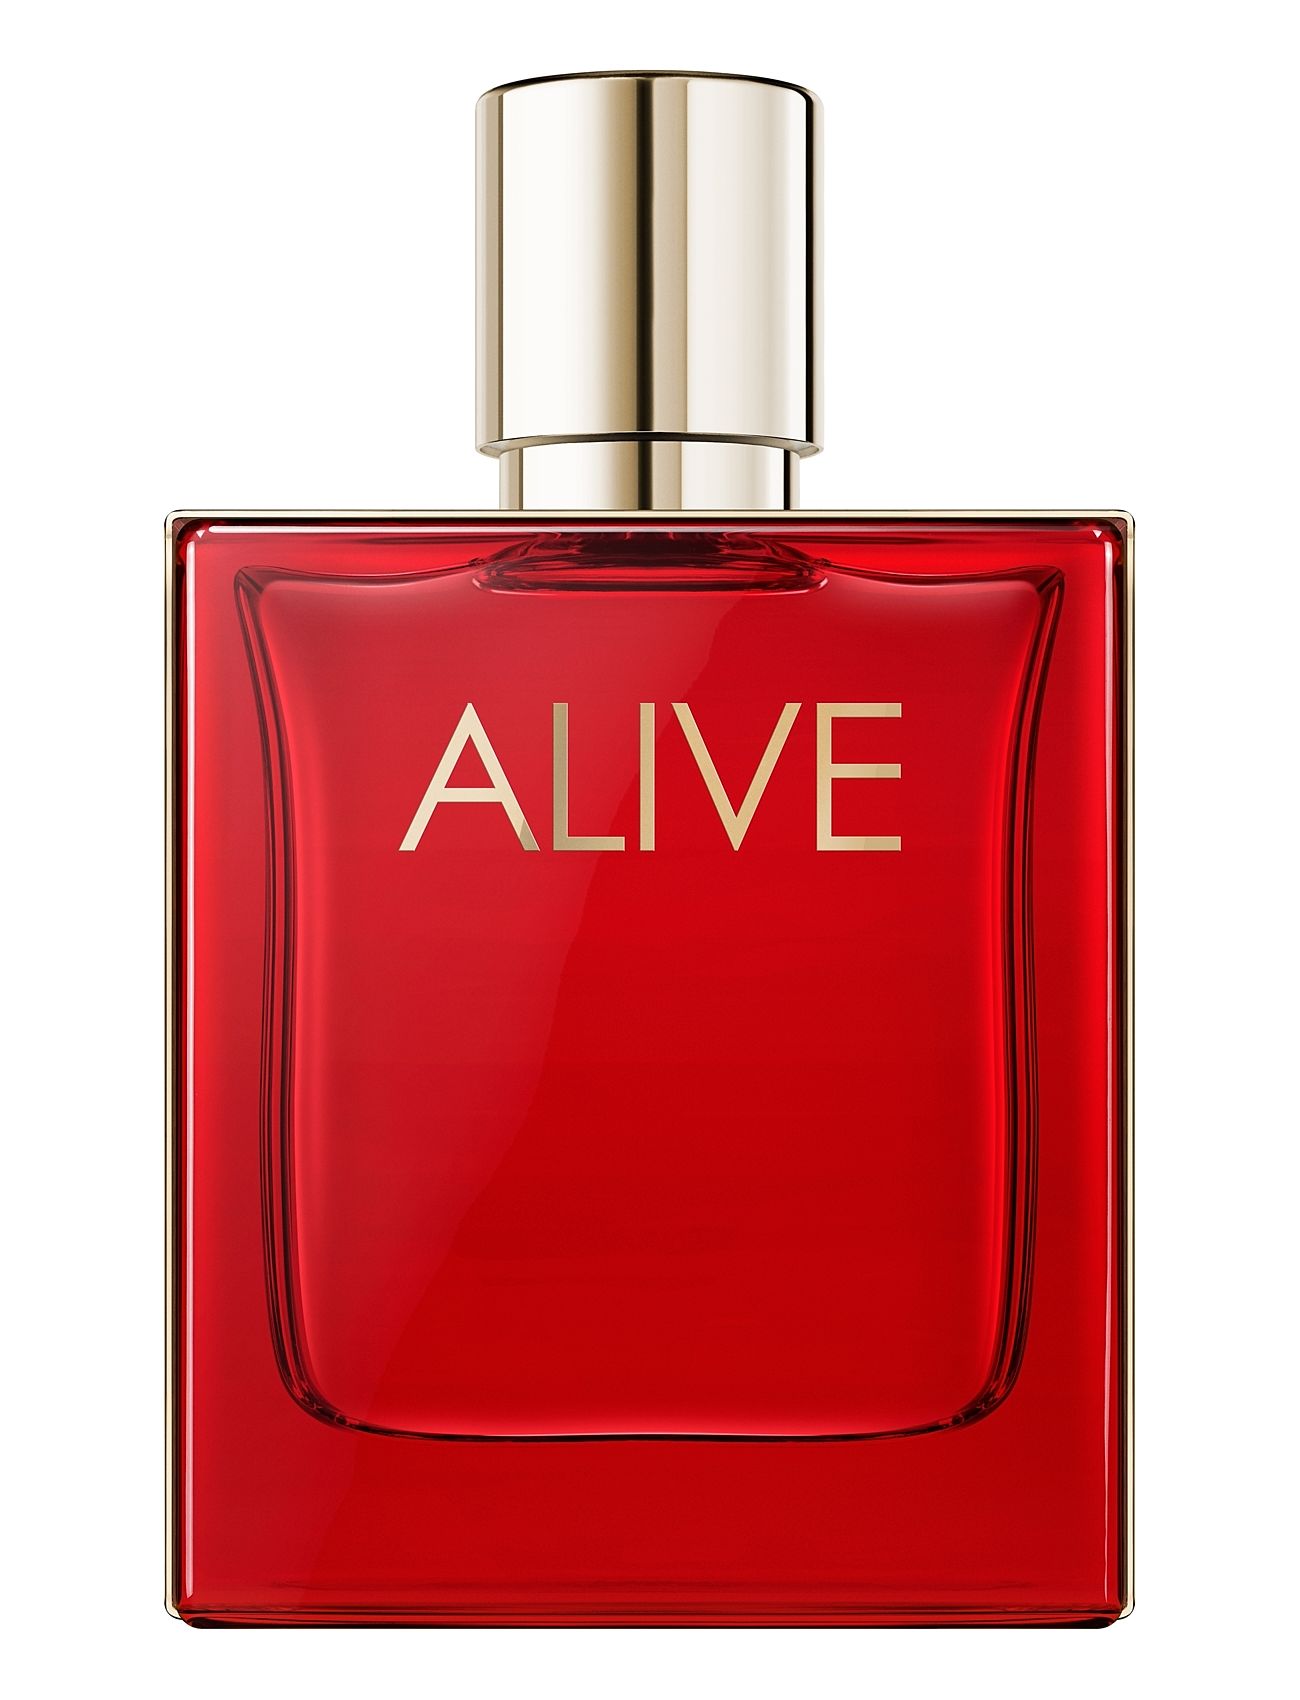 Hugo Boss Alive Parfum Eau De Parfum 50 Ml Parfume Eau De Parfum Nude Hugo Boss Fragrance